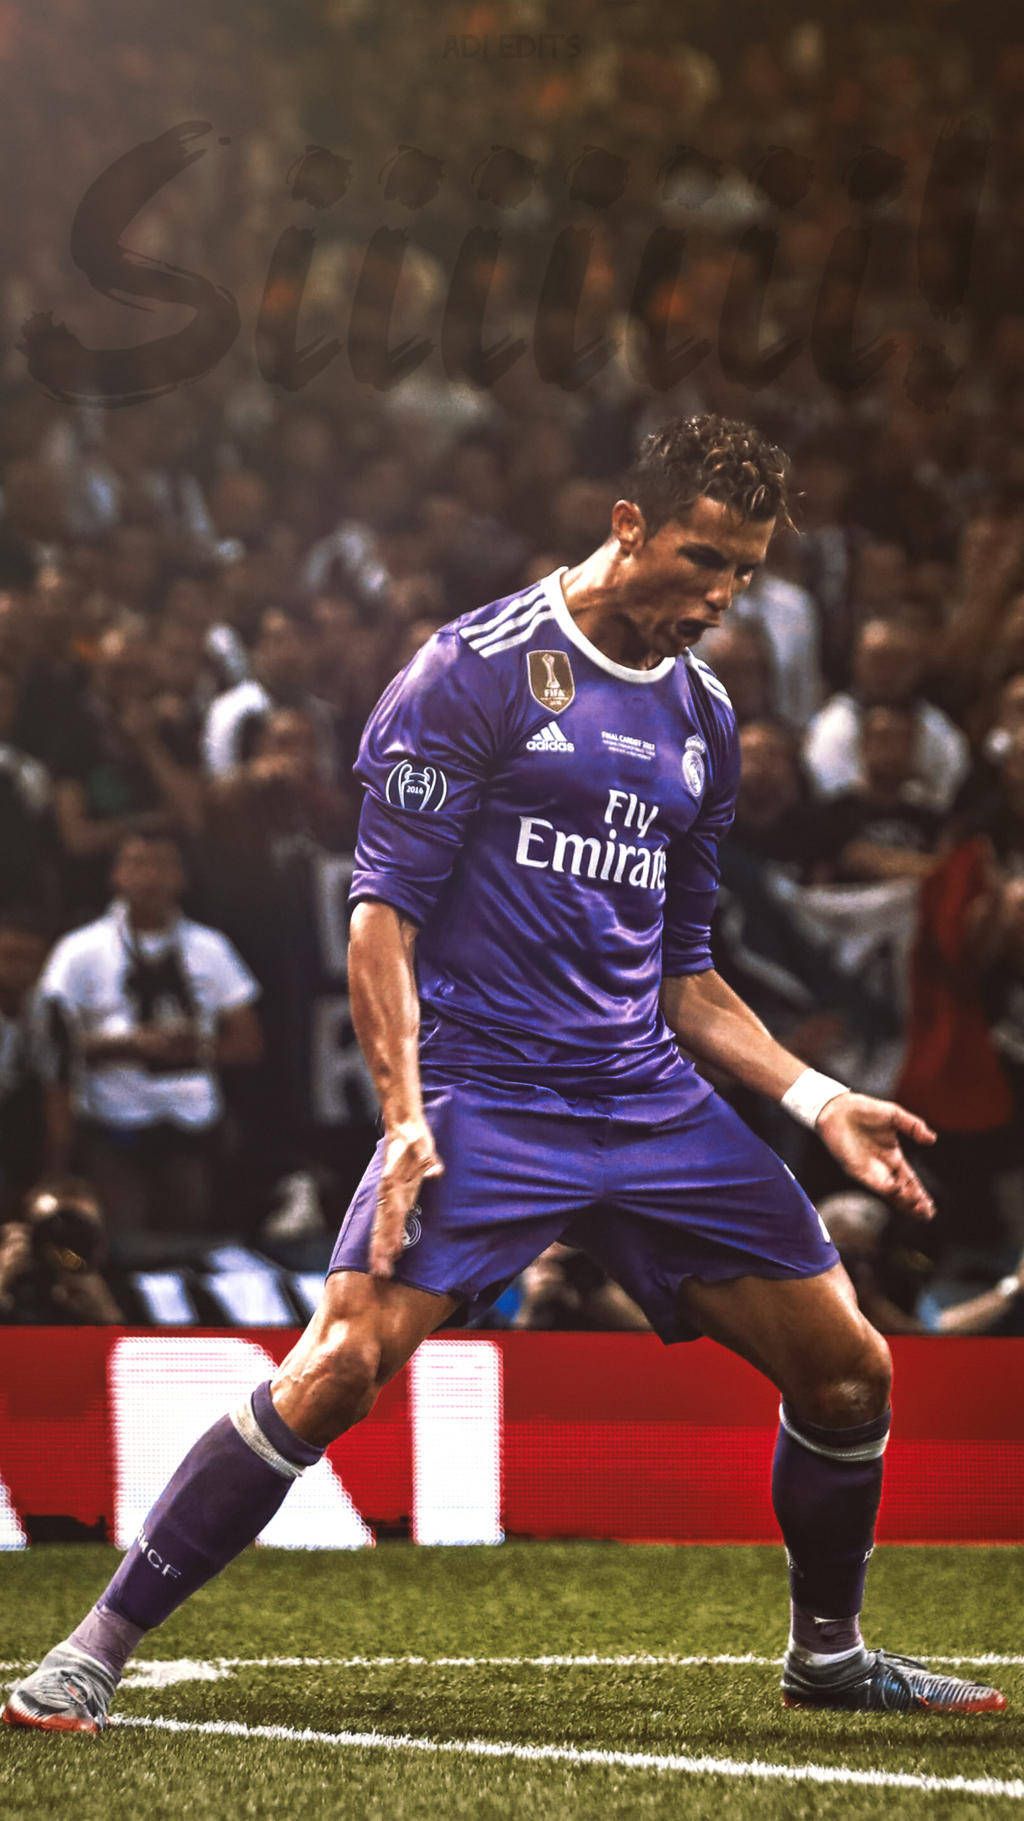  Cristiano Ronaldo Hintergrundbild 1024x1821. Download free Real Madrid Footballer Cristiano Ronaldo Celebration Wallpaper